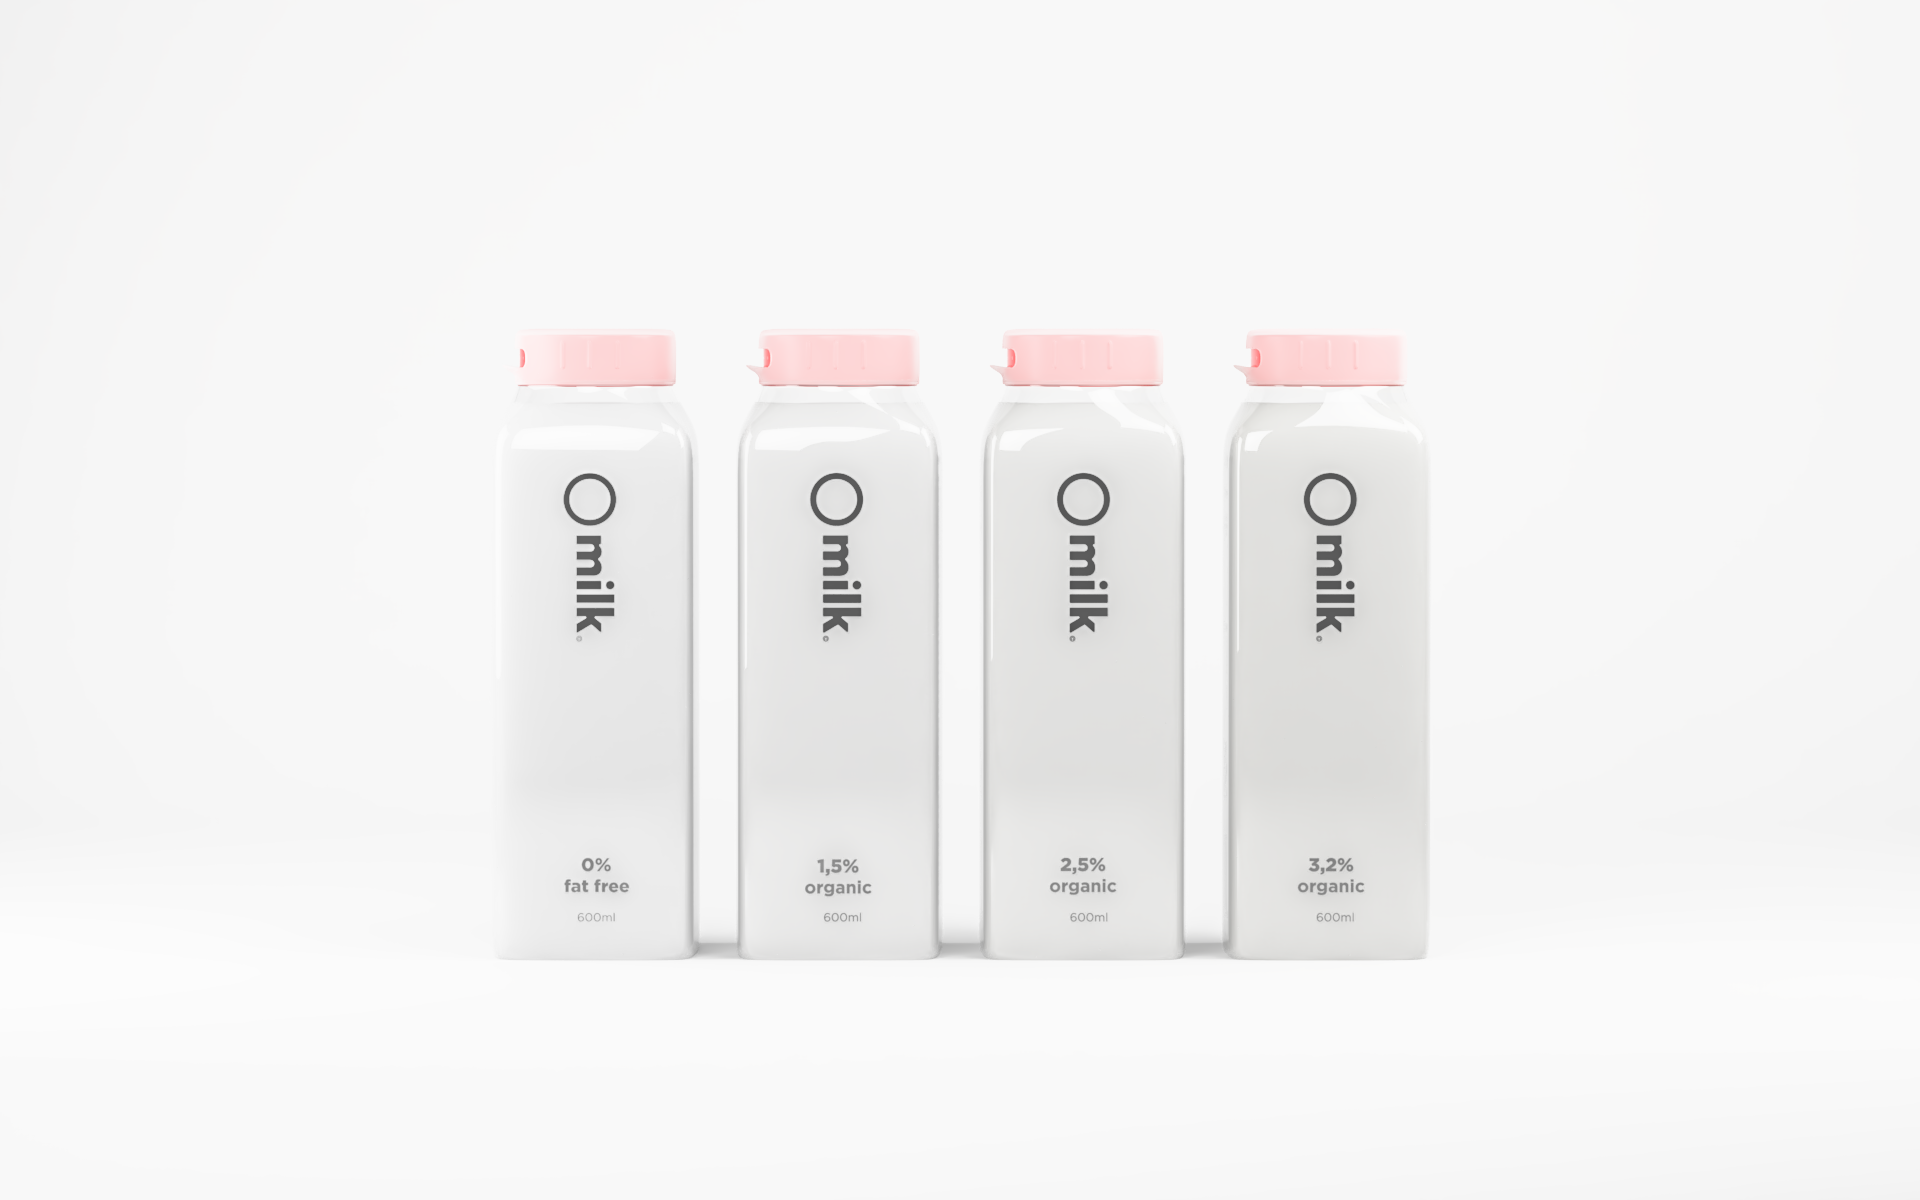 Branding and Packaging Design: Milk